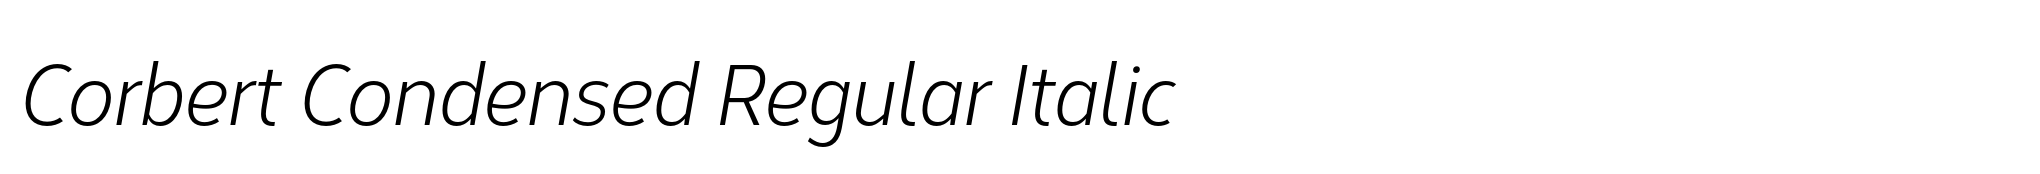 Corbert Condensed Regular Italic image